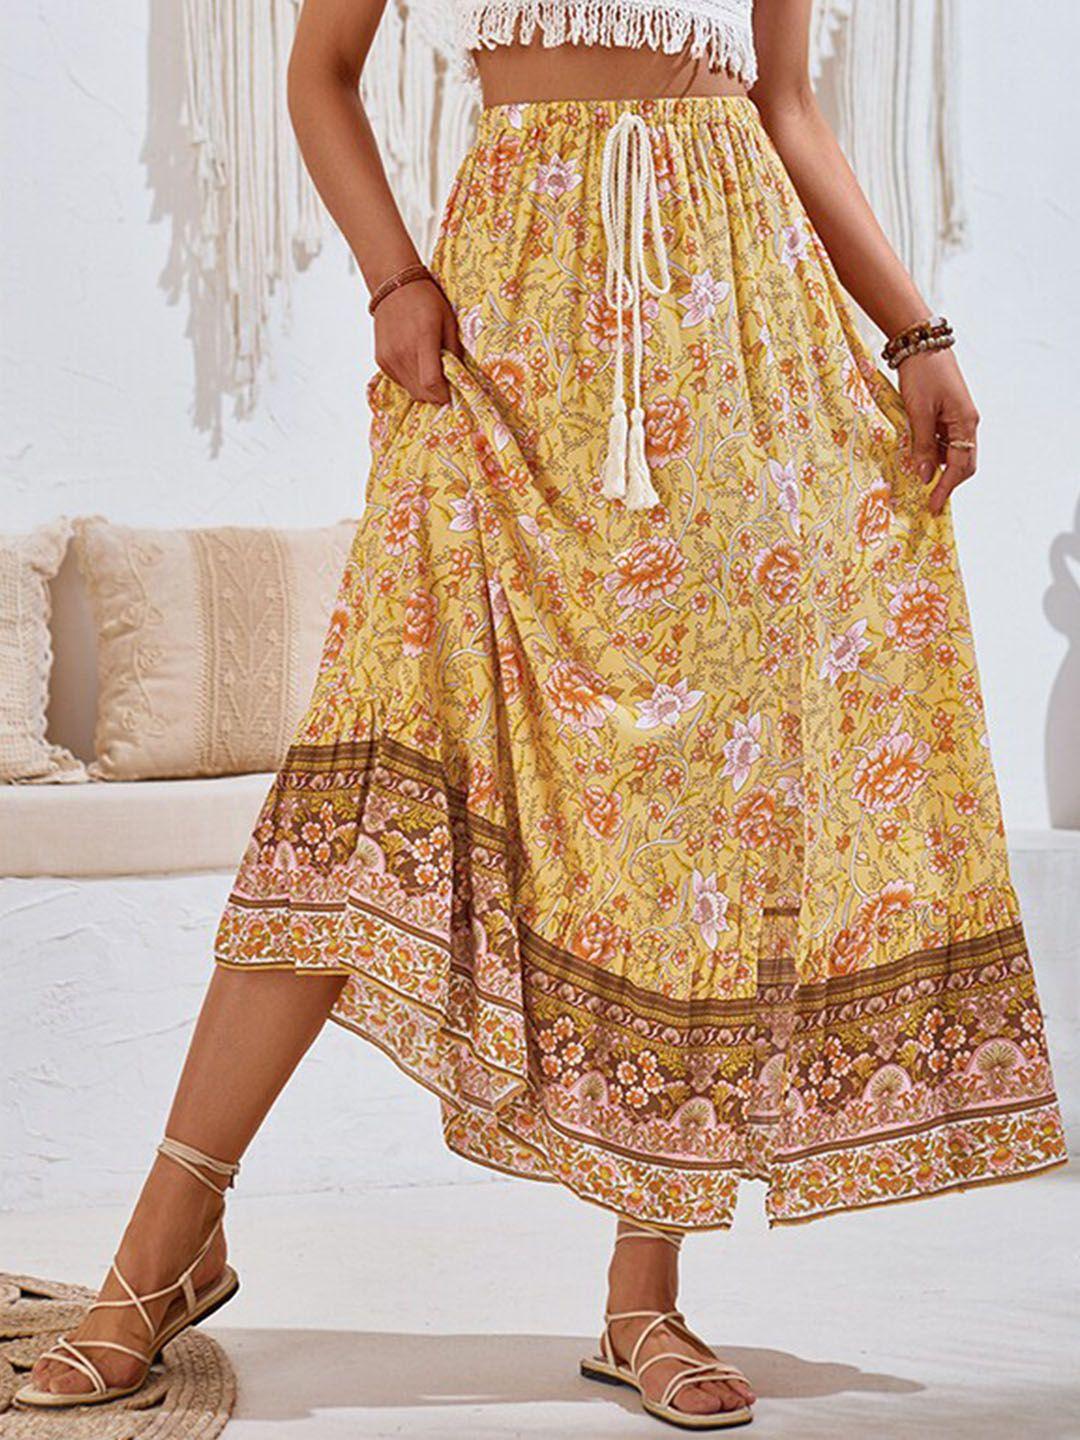 stylecast-printed-flared-midi-skirt